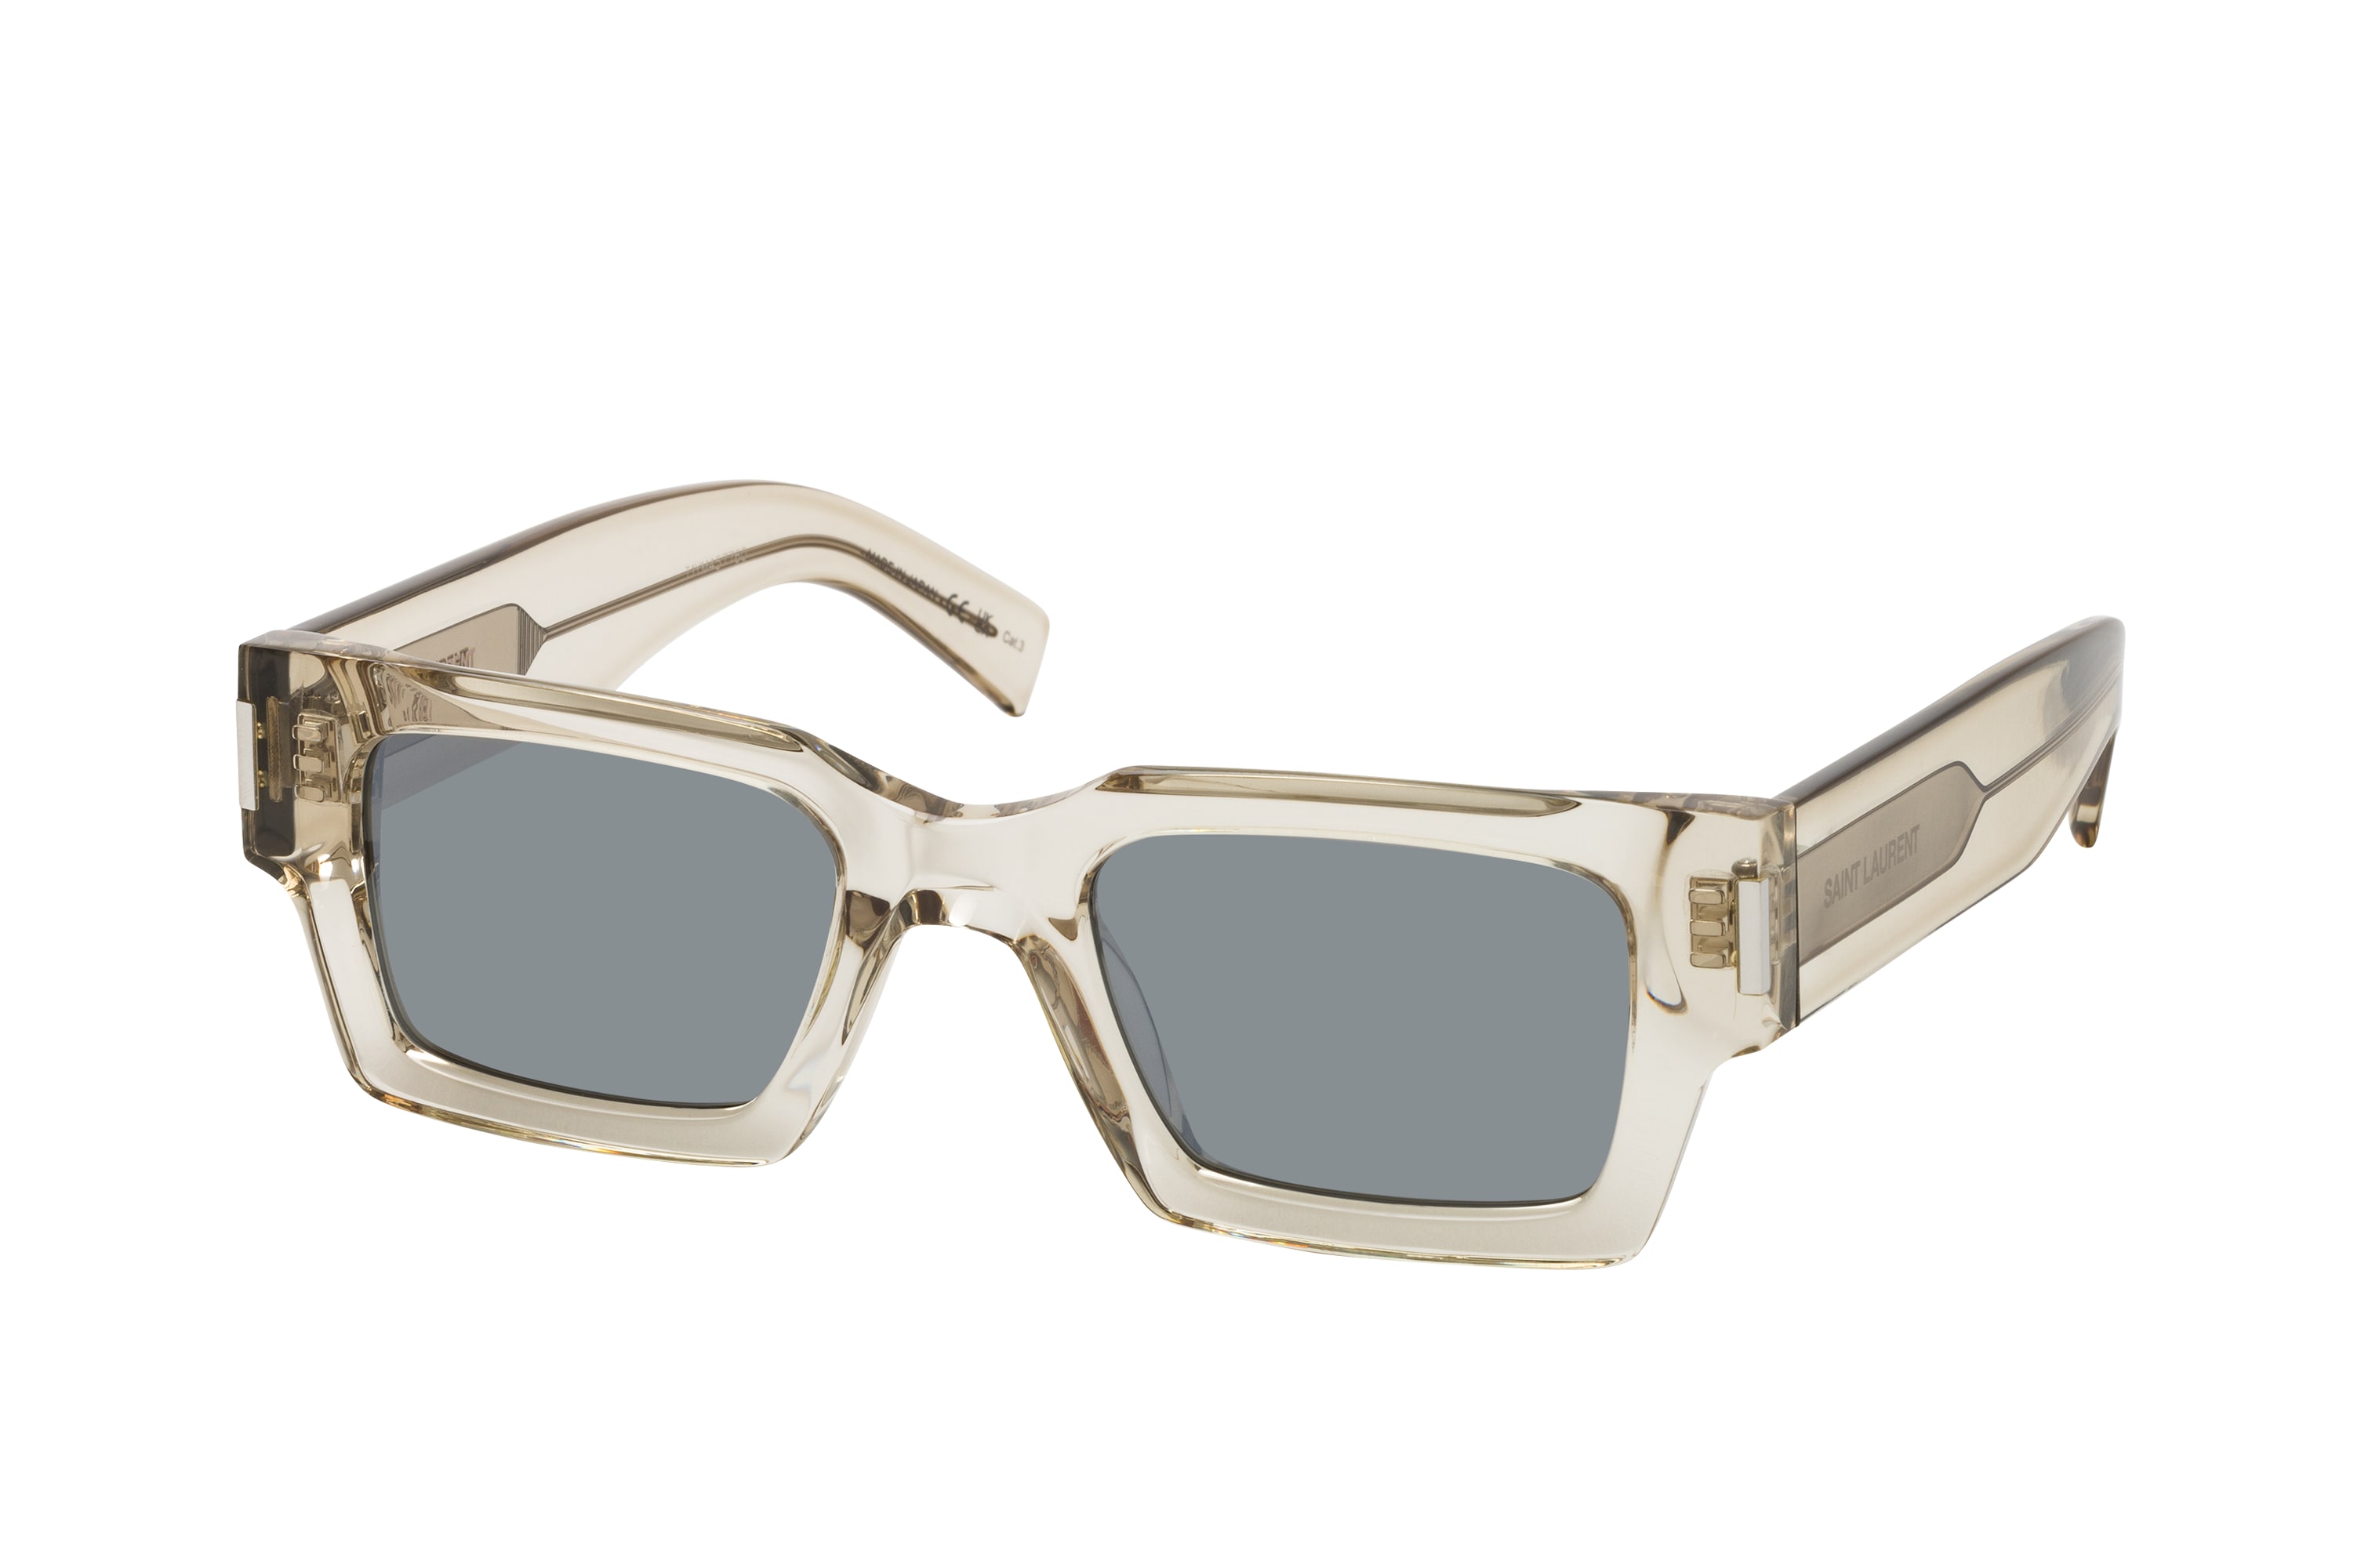 Saint Laurent SL 572 003 sunglasses